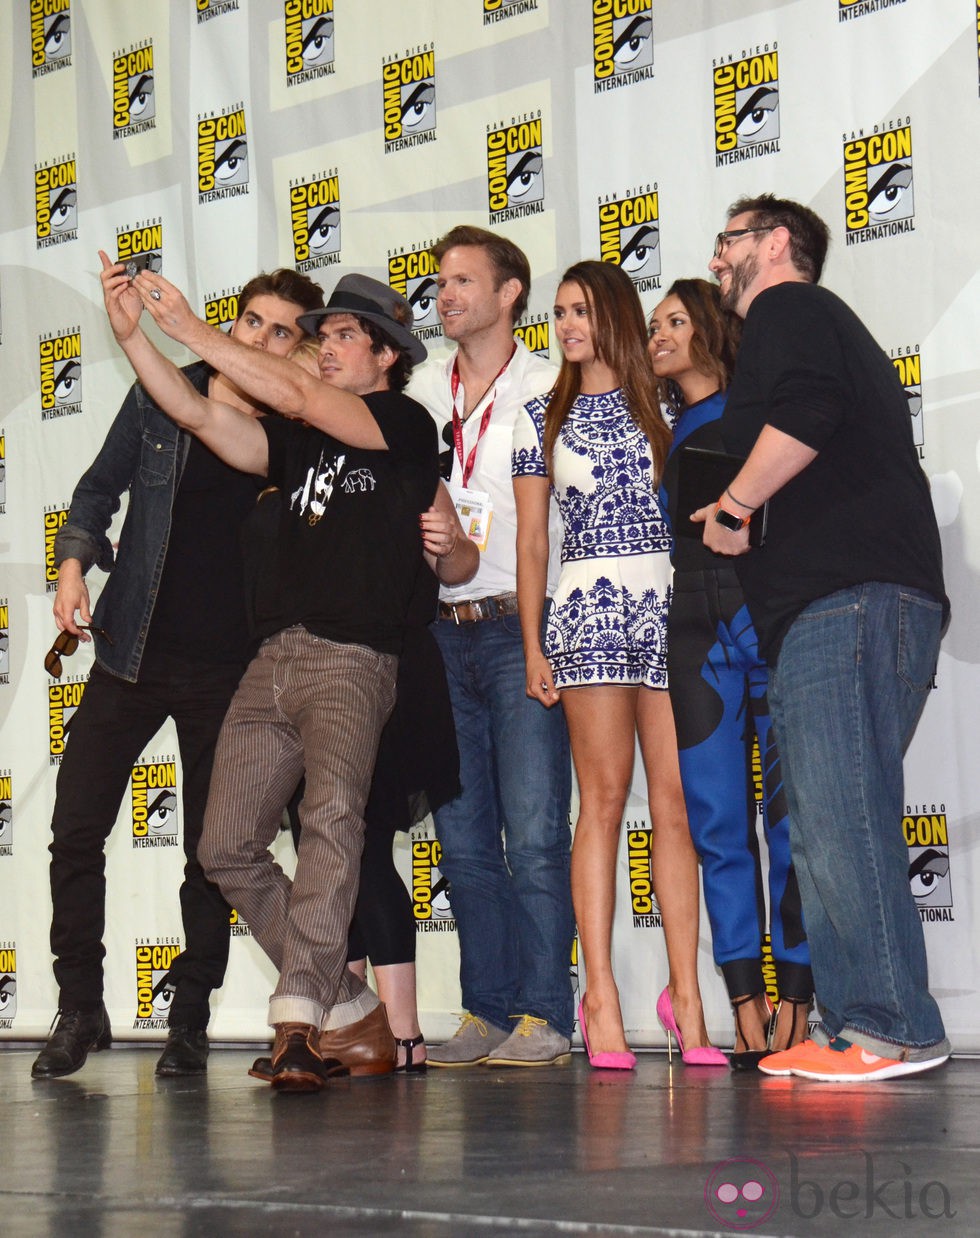 Paul Wesley, Ian Somerhalder, Matthew Davis, Nina Dobrev, Kat Graham y Damian Holbrook en la Comic-Con 2014